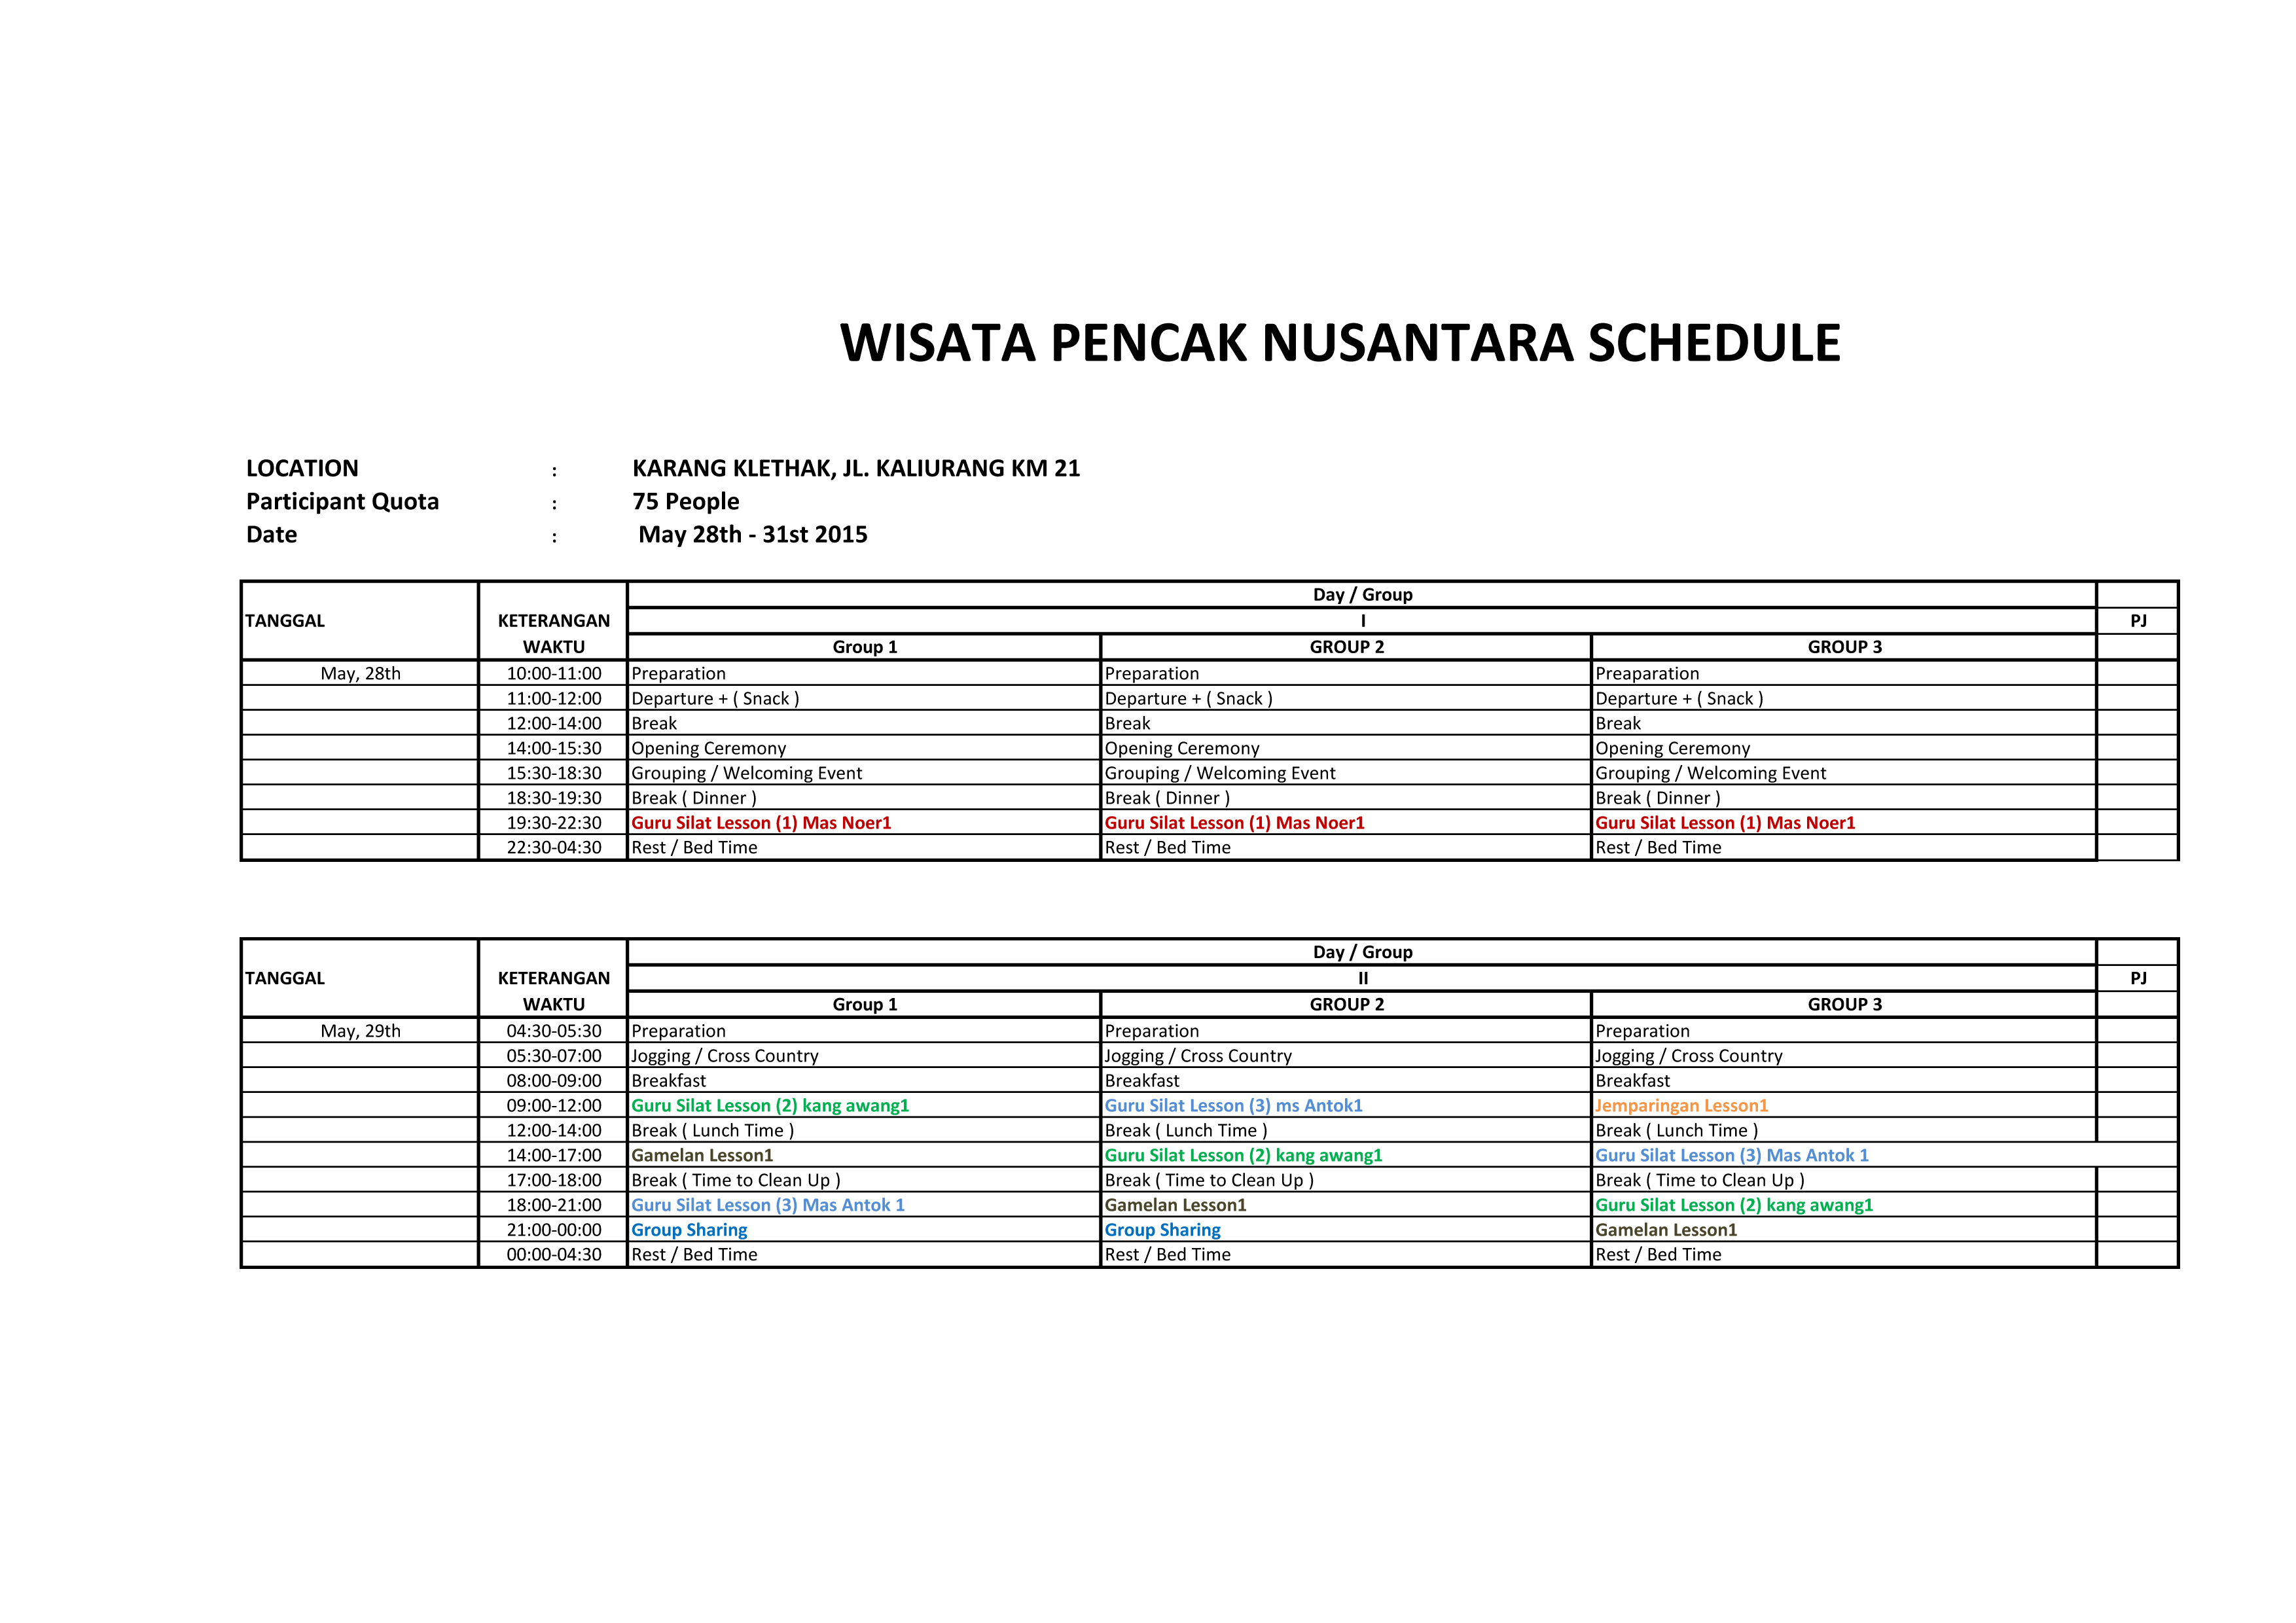 Wisata Pencak Nusantara Event Schedule